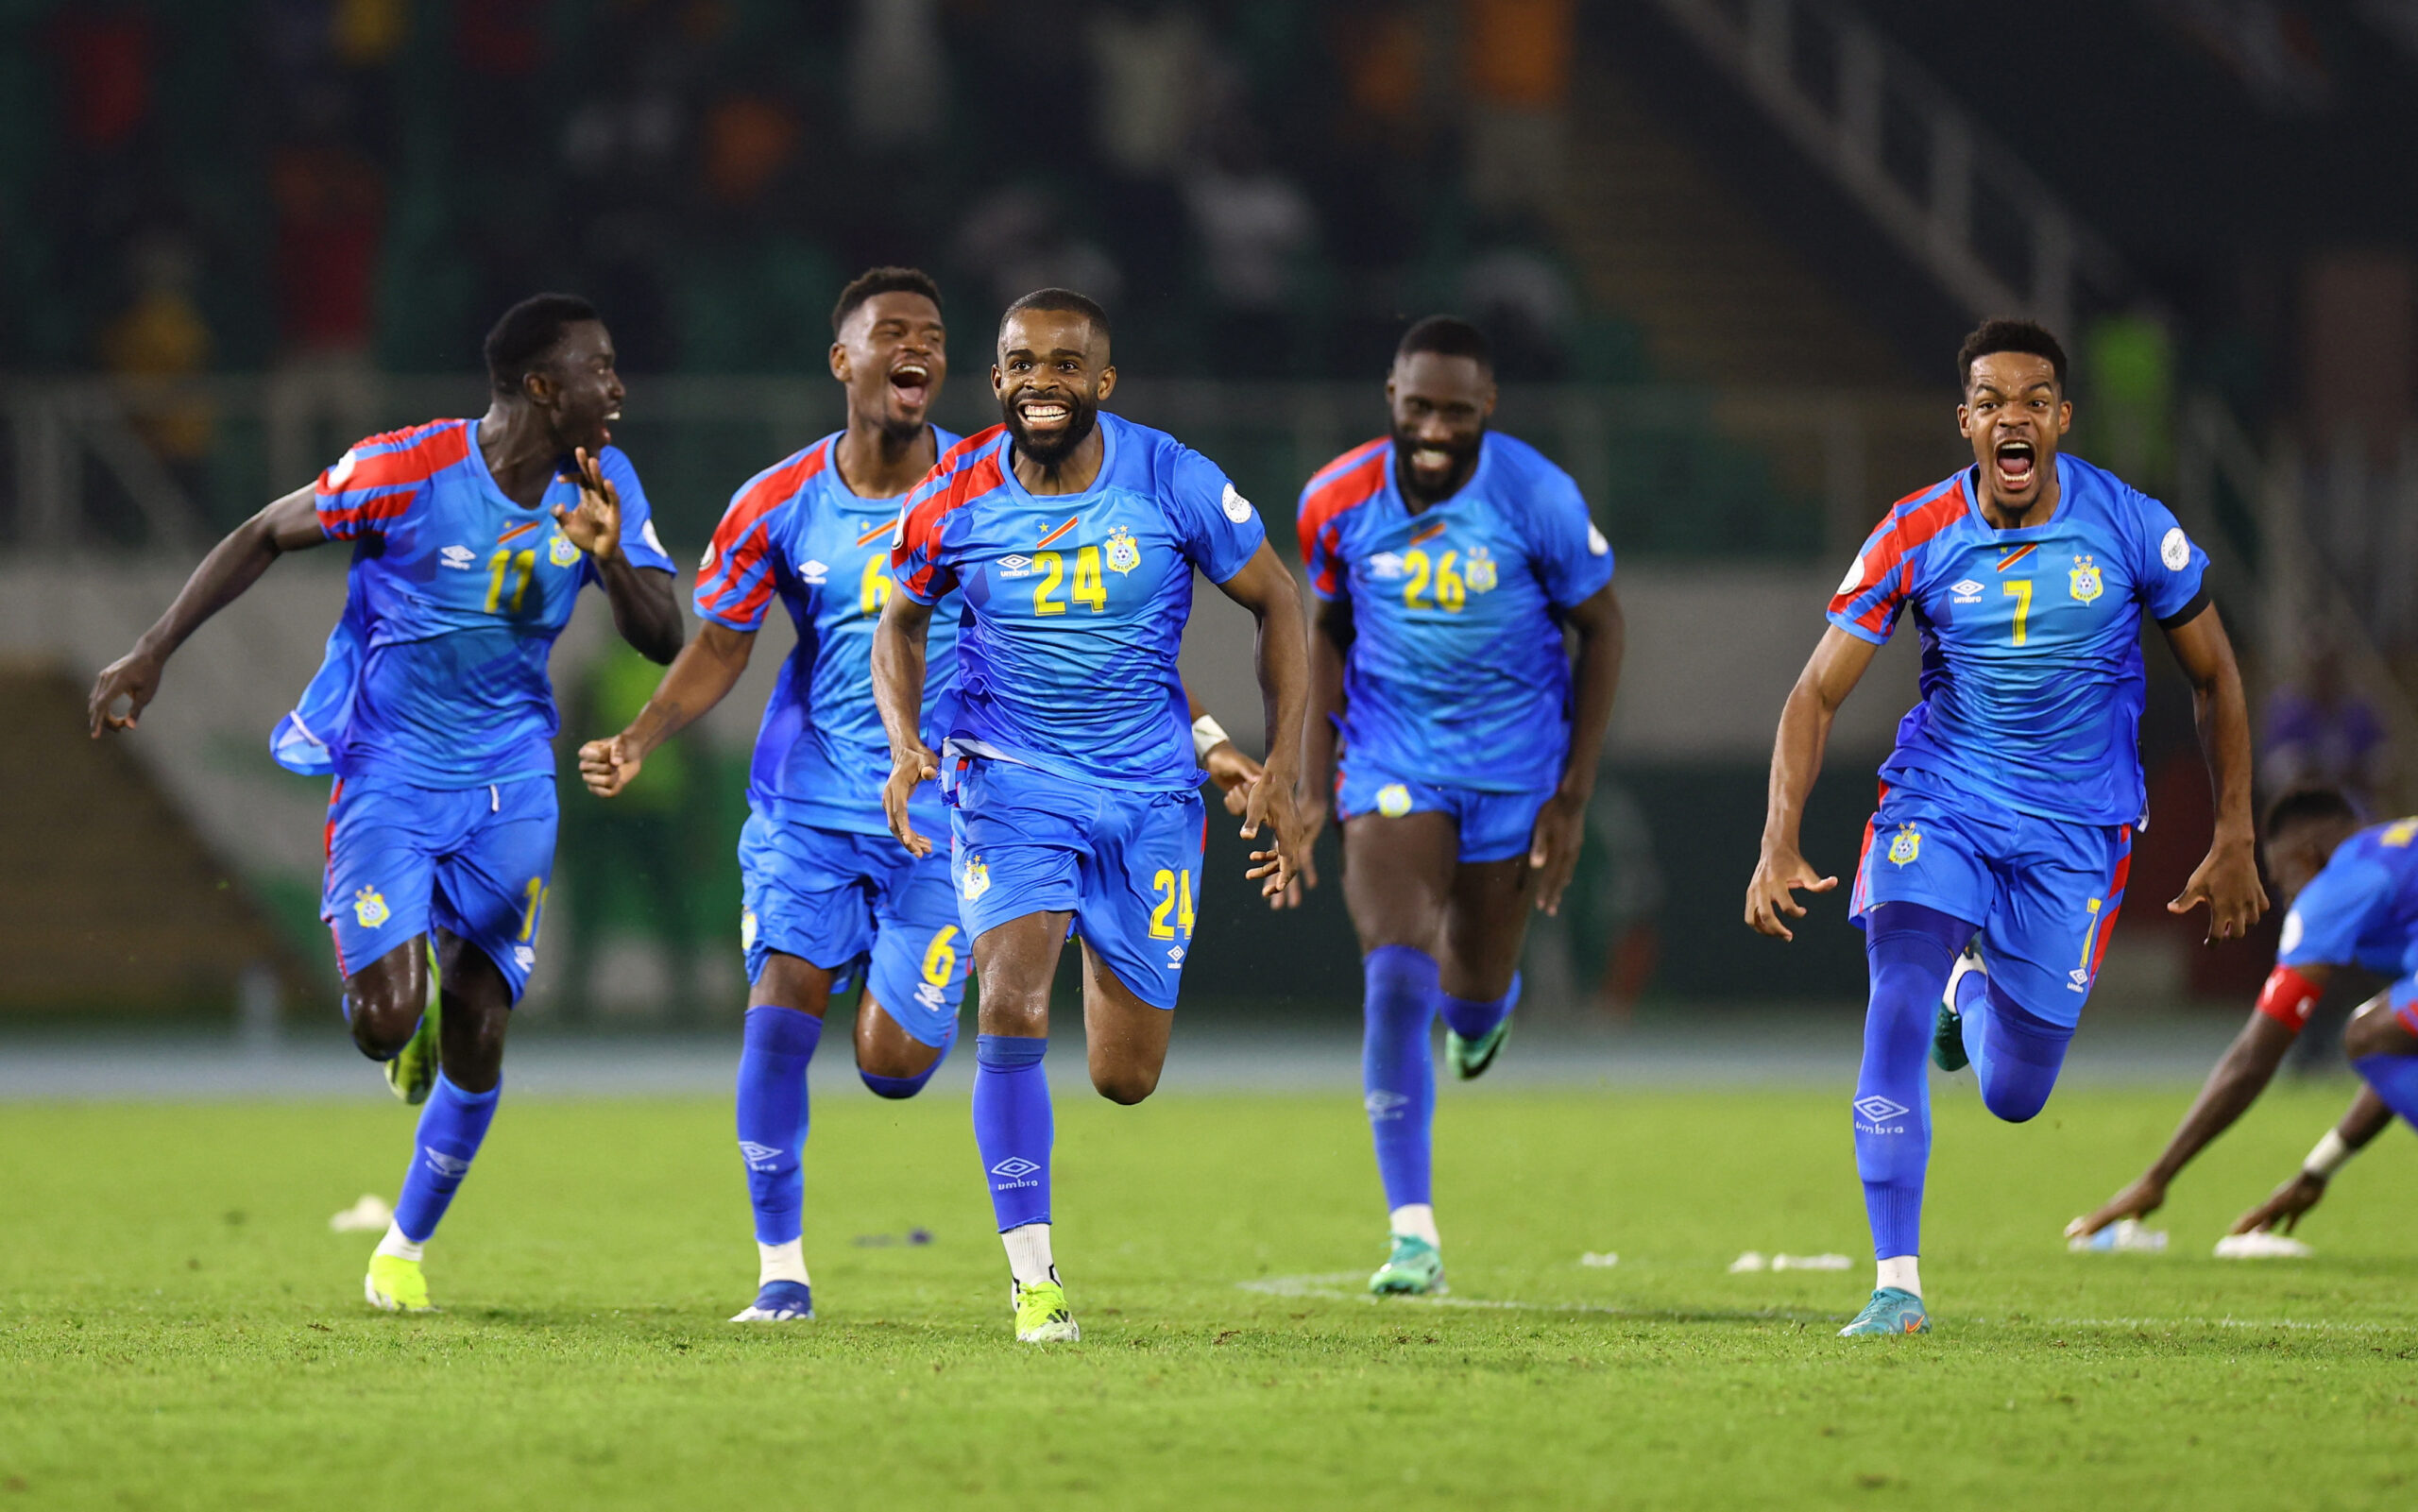 D.R Congo advances to the quarter-finals after dramatic penalty shootout